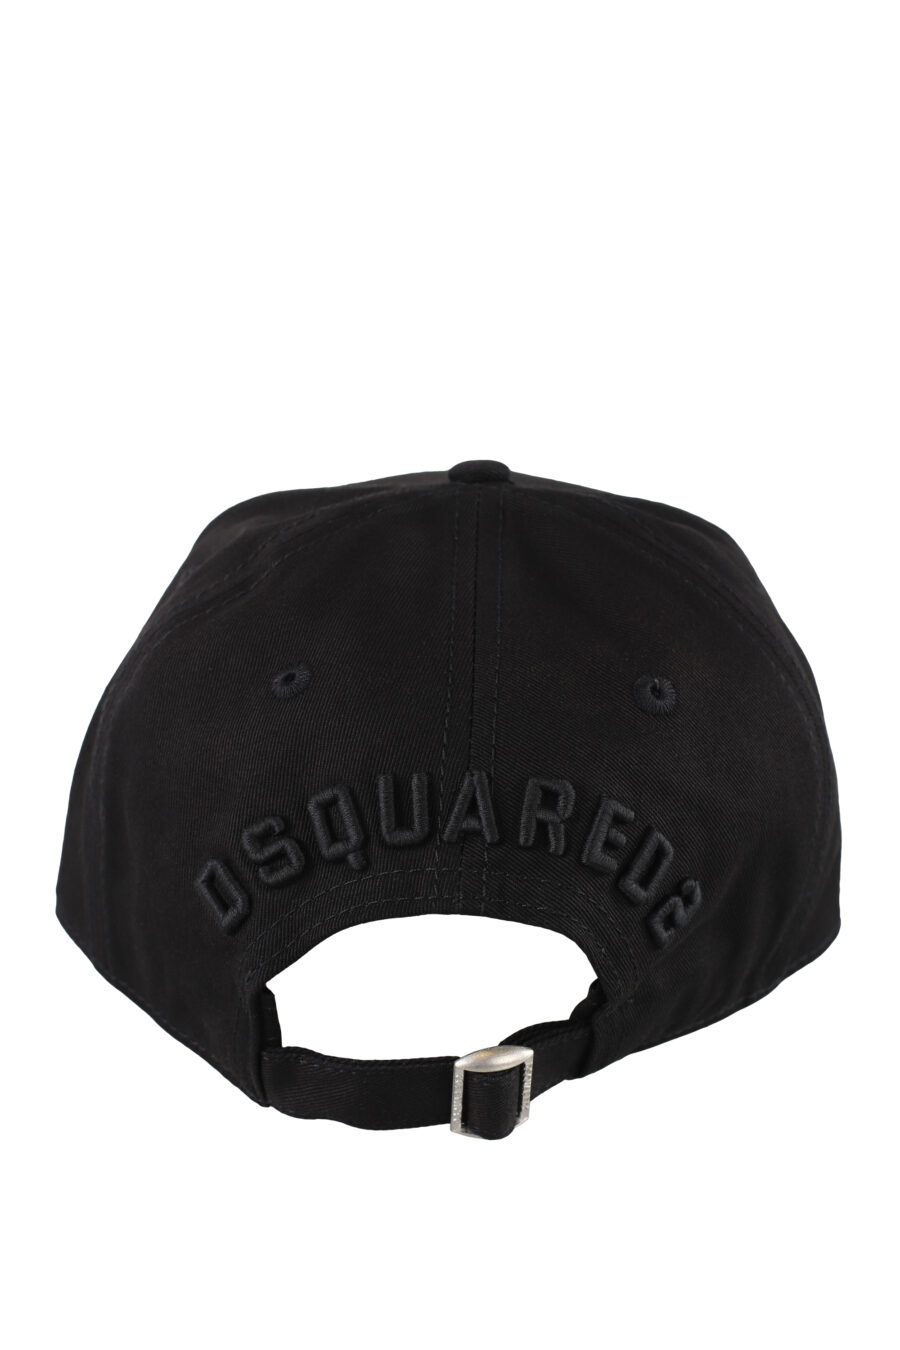 Schwarze Kappe mit einfarbigem "Icon"-Logo - IMG 5168